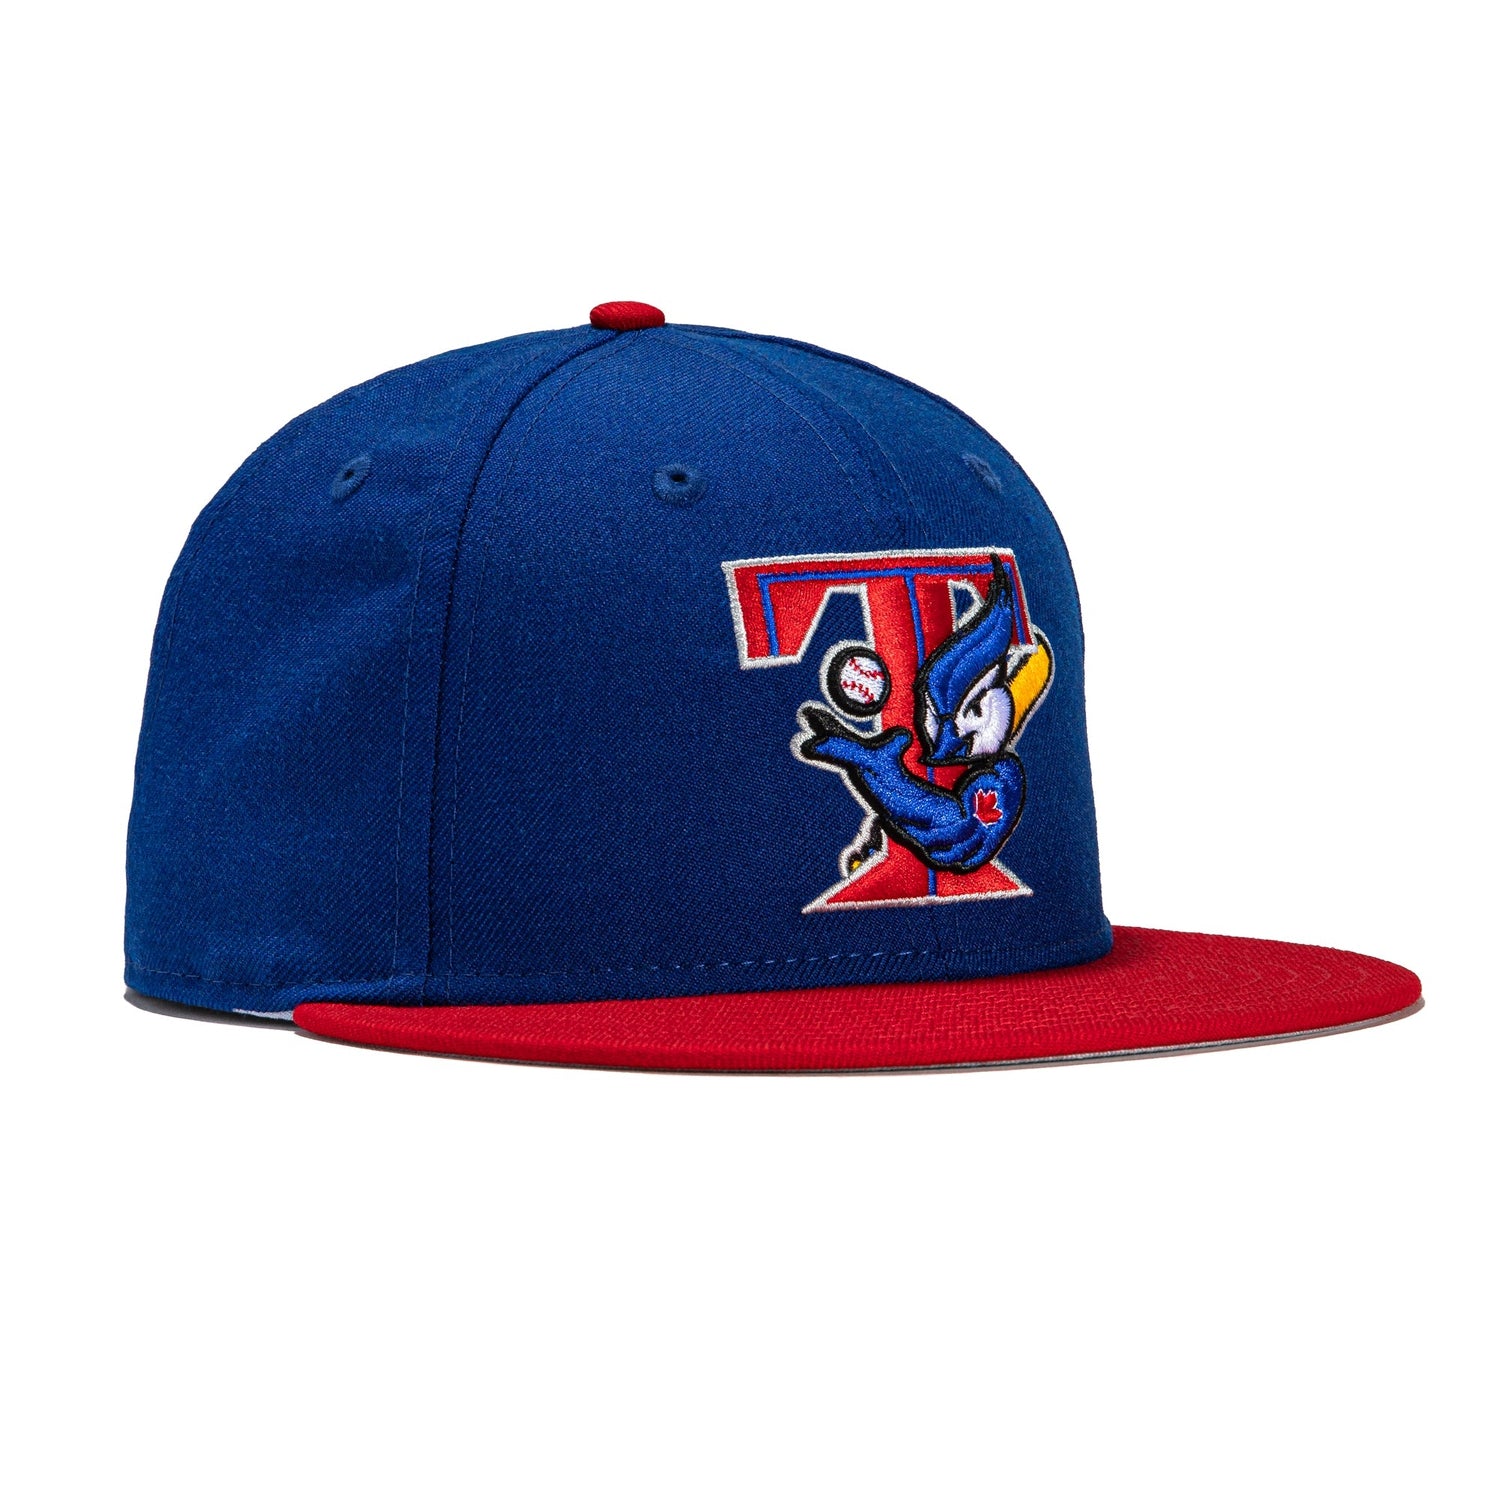 47 brand Toronto Blue Jays Red hat MLB Snapback